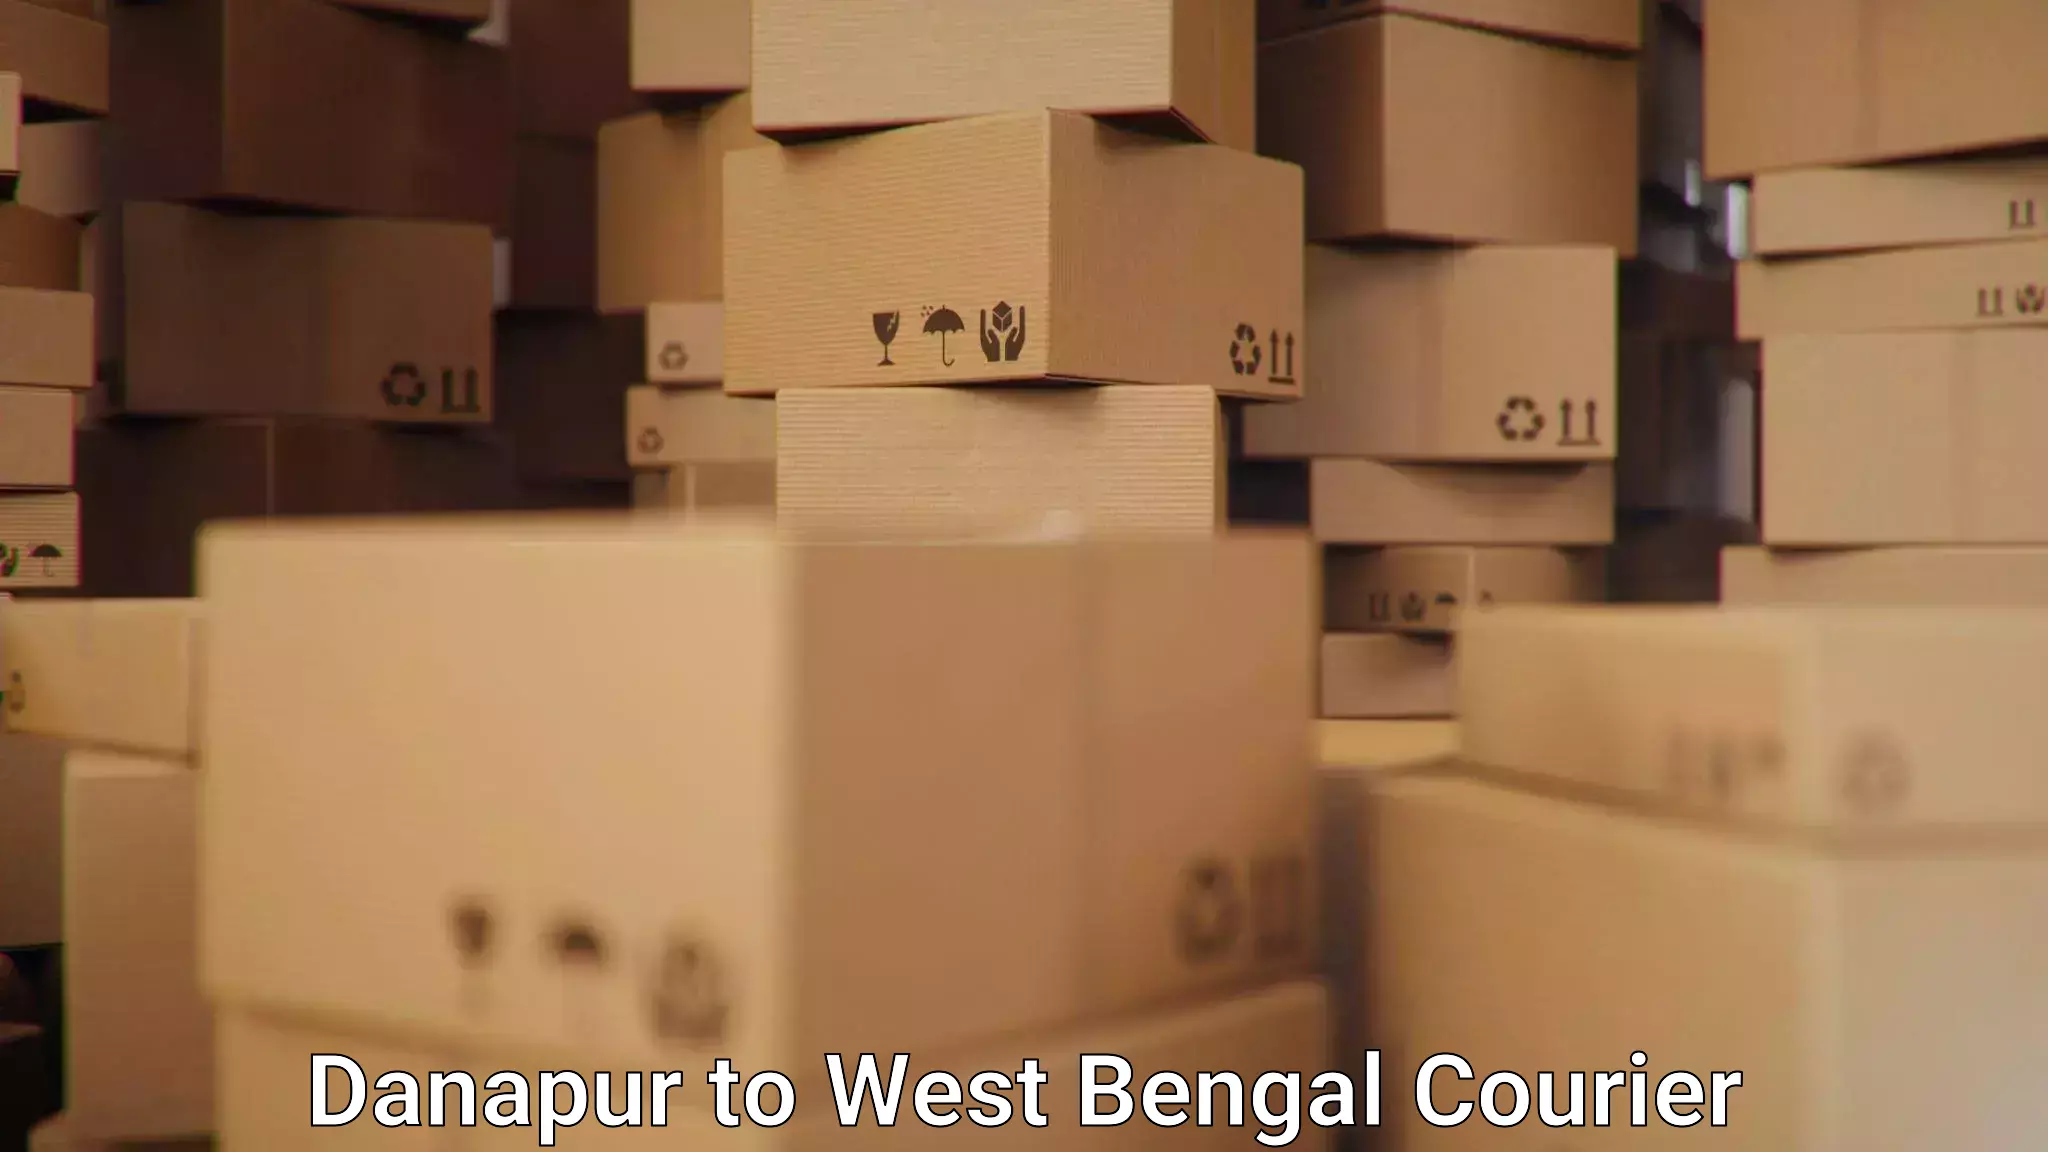 Courier service efficiency in Danapur to Bagdogra